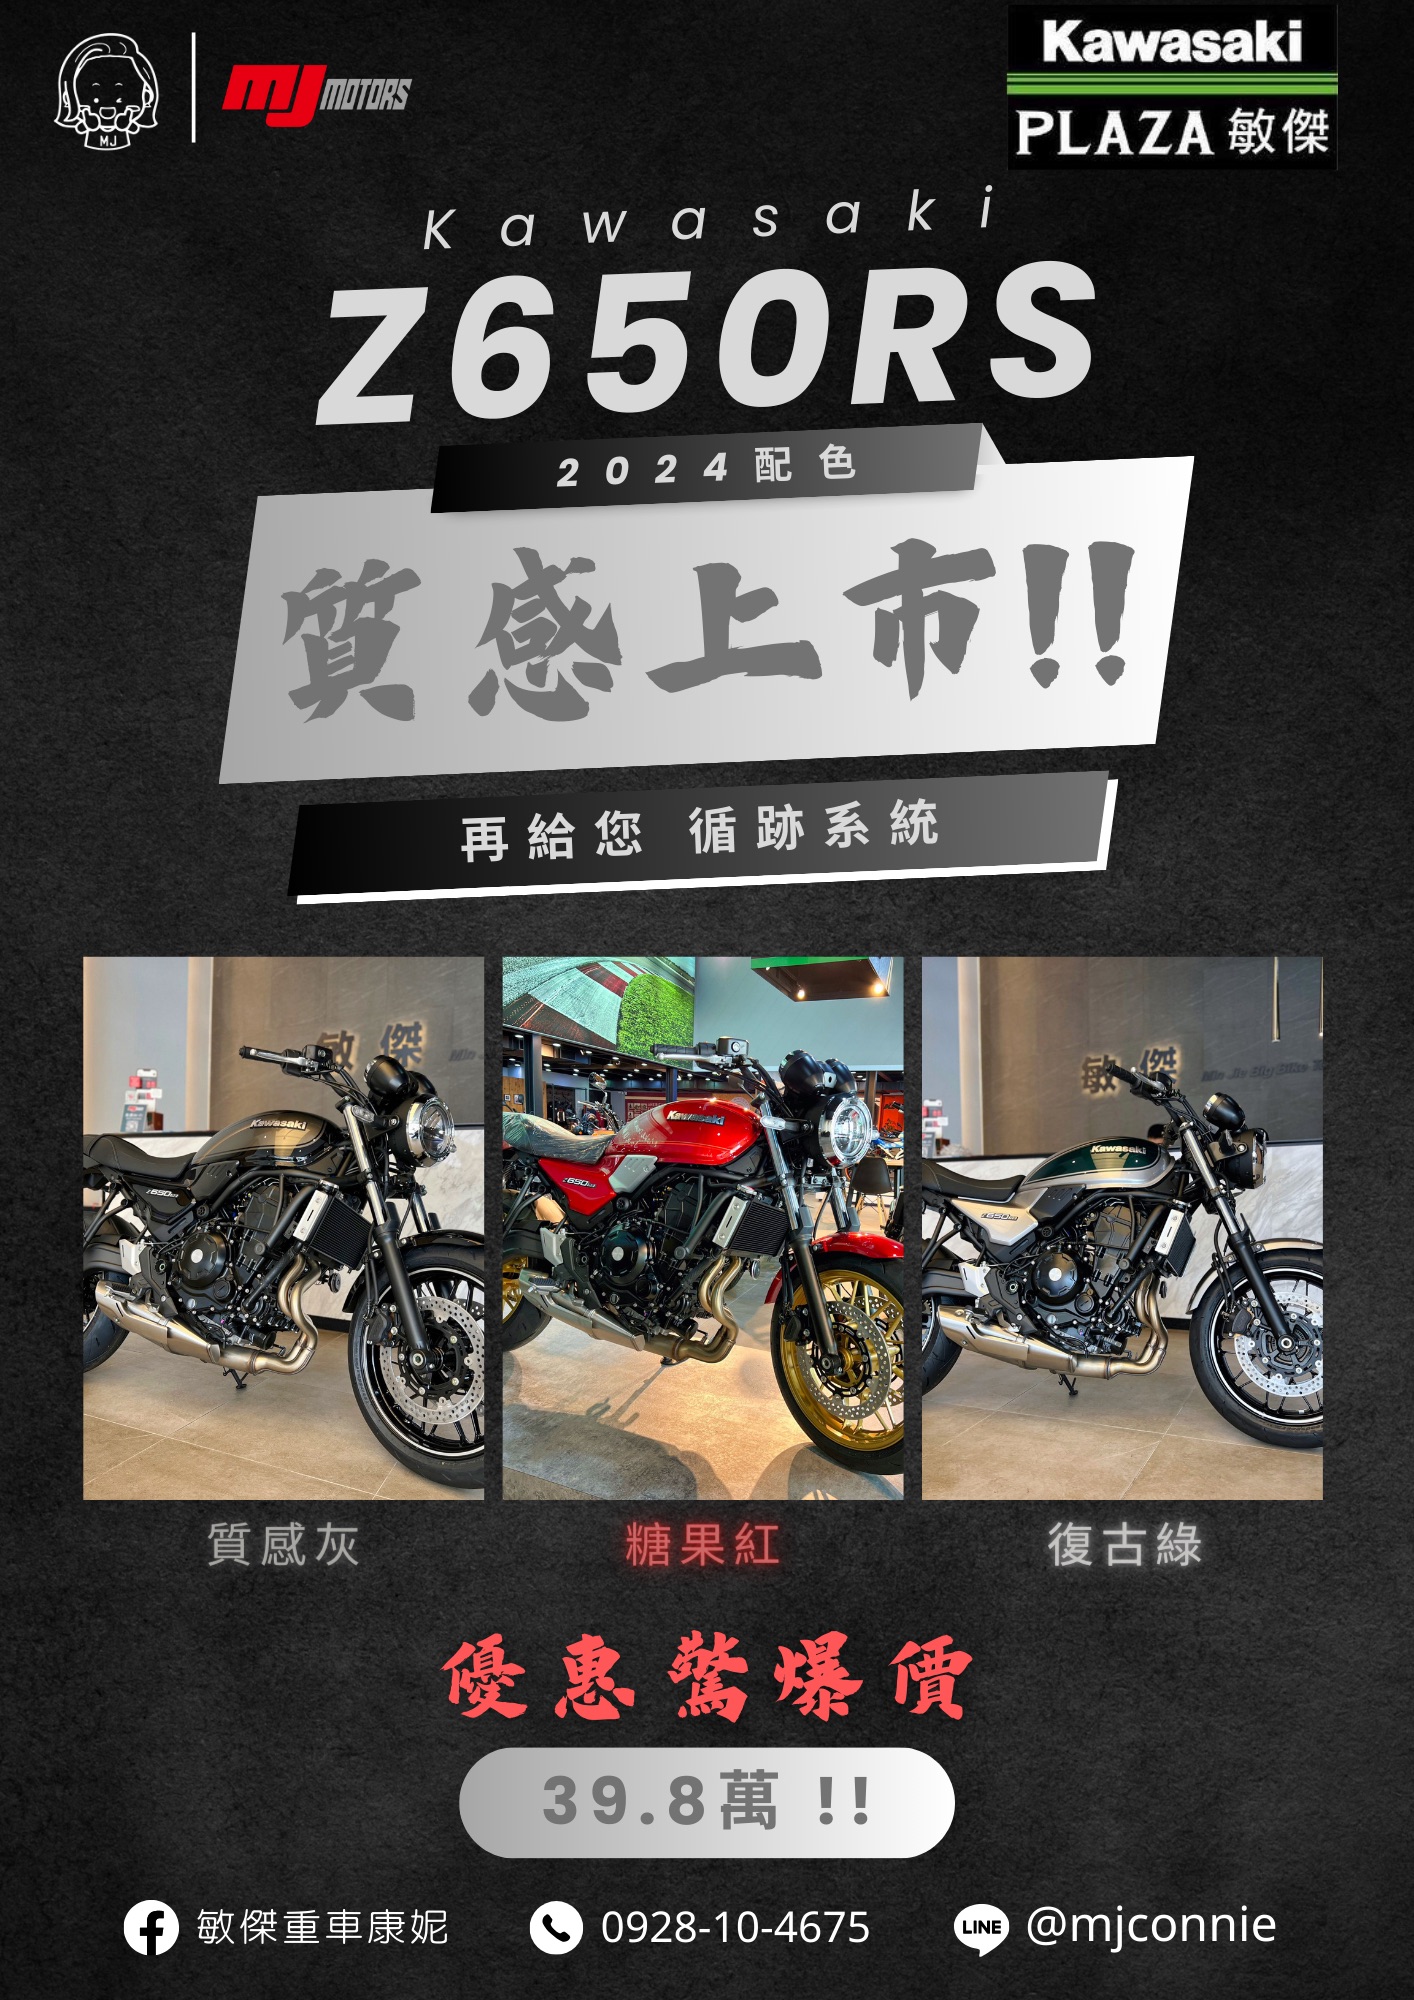 Kawasaki Z650RS新車出售中 『敏傑康妮』2024 新配色到啦 Kawasaki Z650RS 敏傑康妮 有三色到齊 還有循跡系統 趕緊卡位嘍 | 敏傑車業資深銷售專員 康妮 Connie